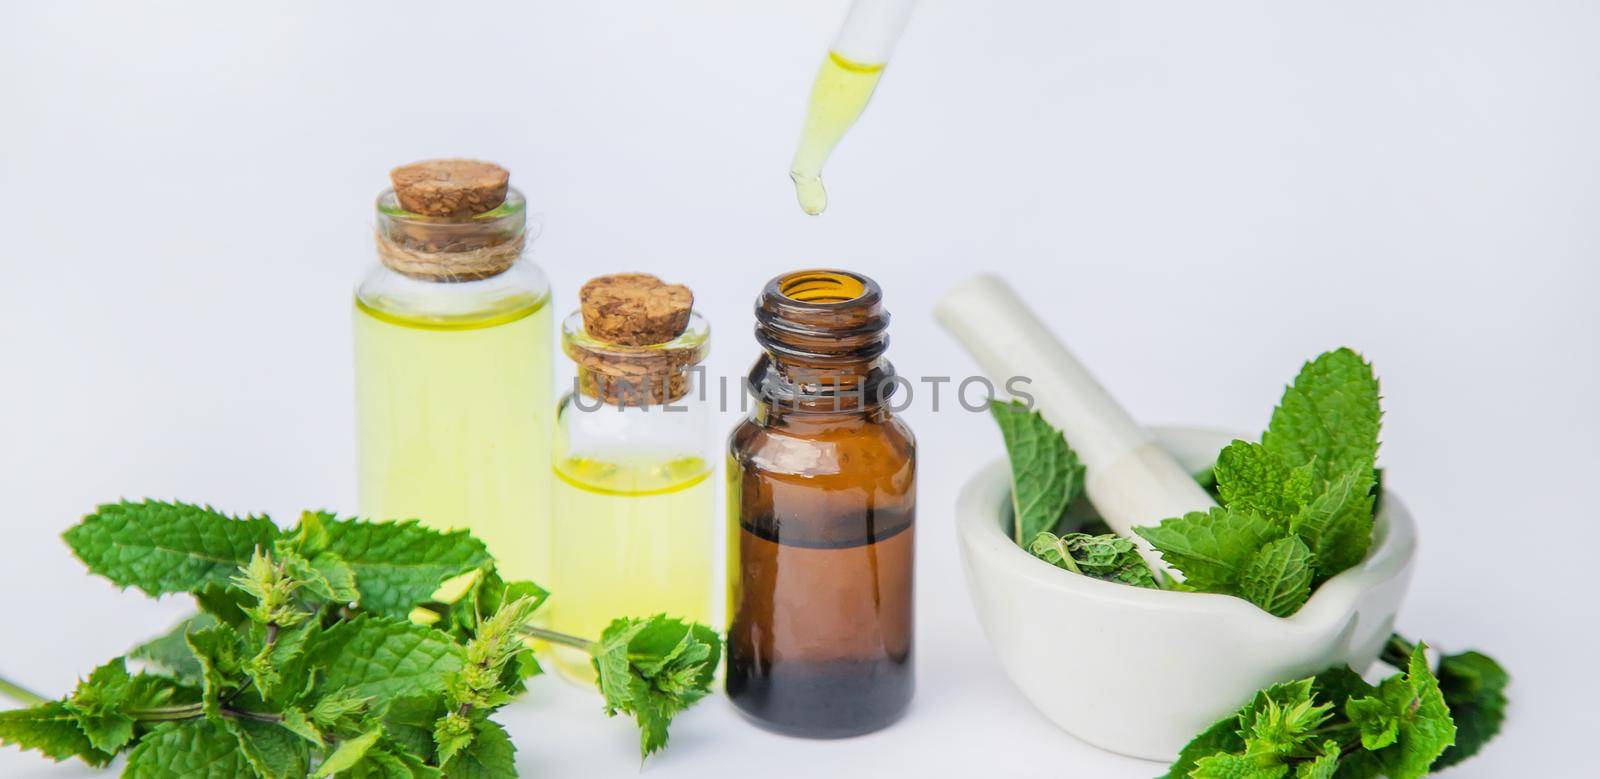 medicinal herbs. Selective focus. medicine and health nature